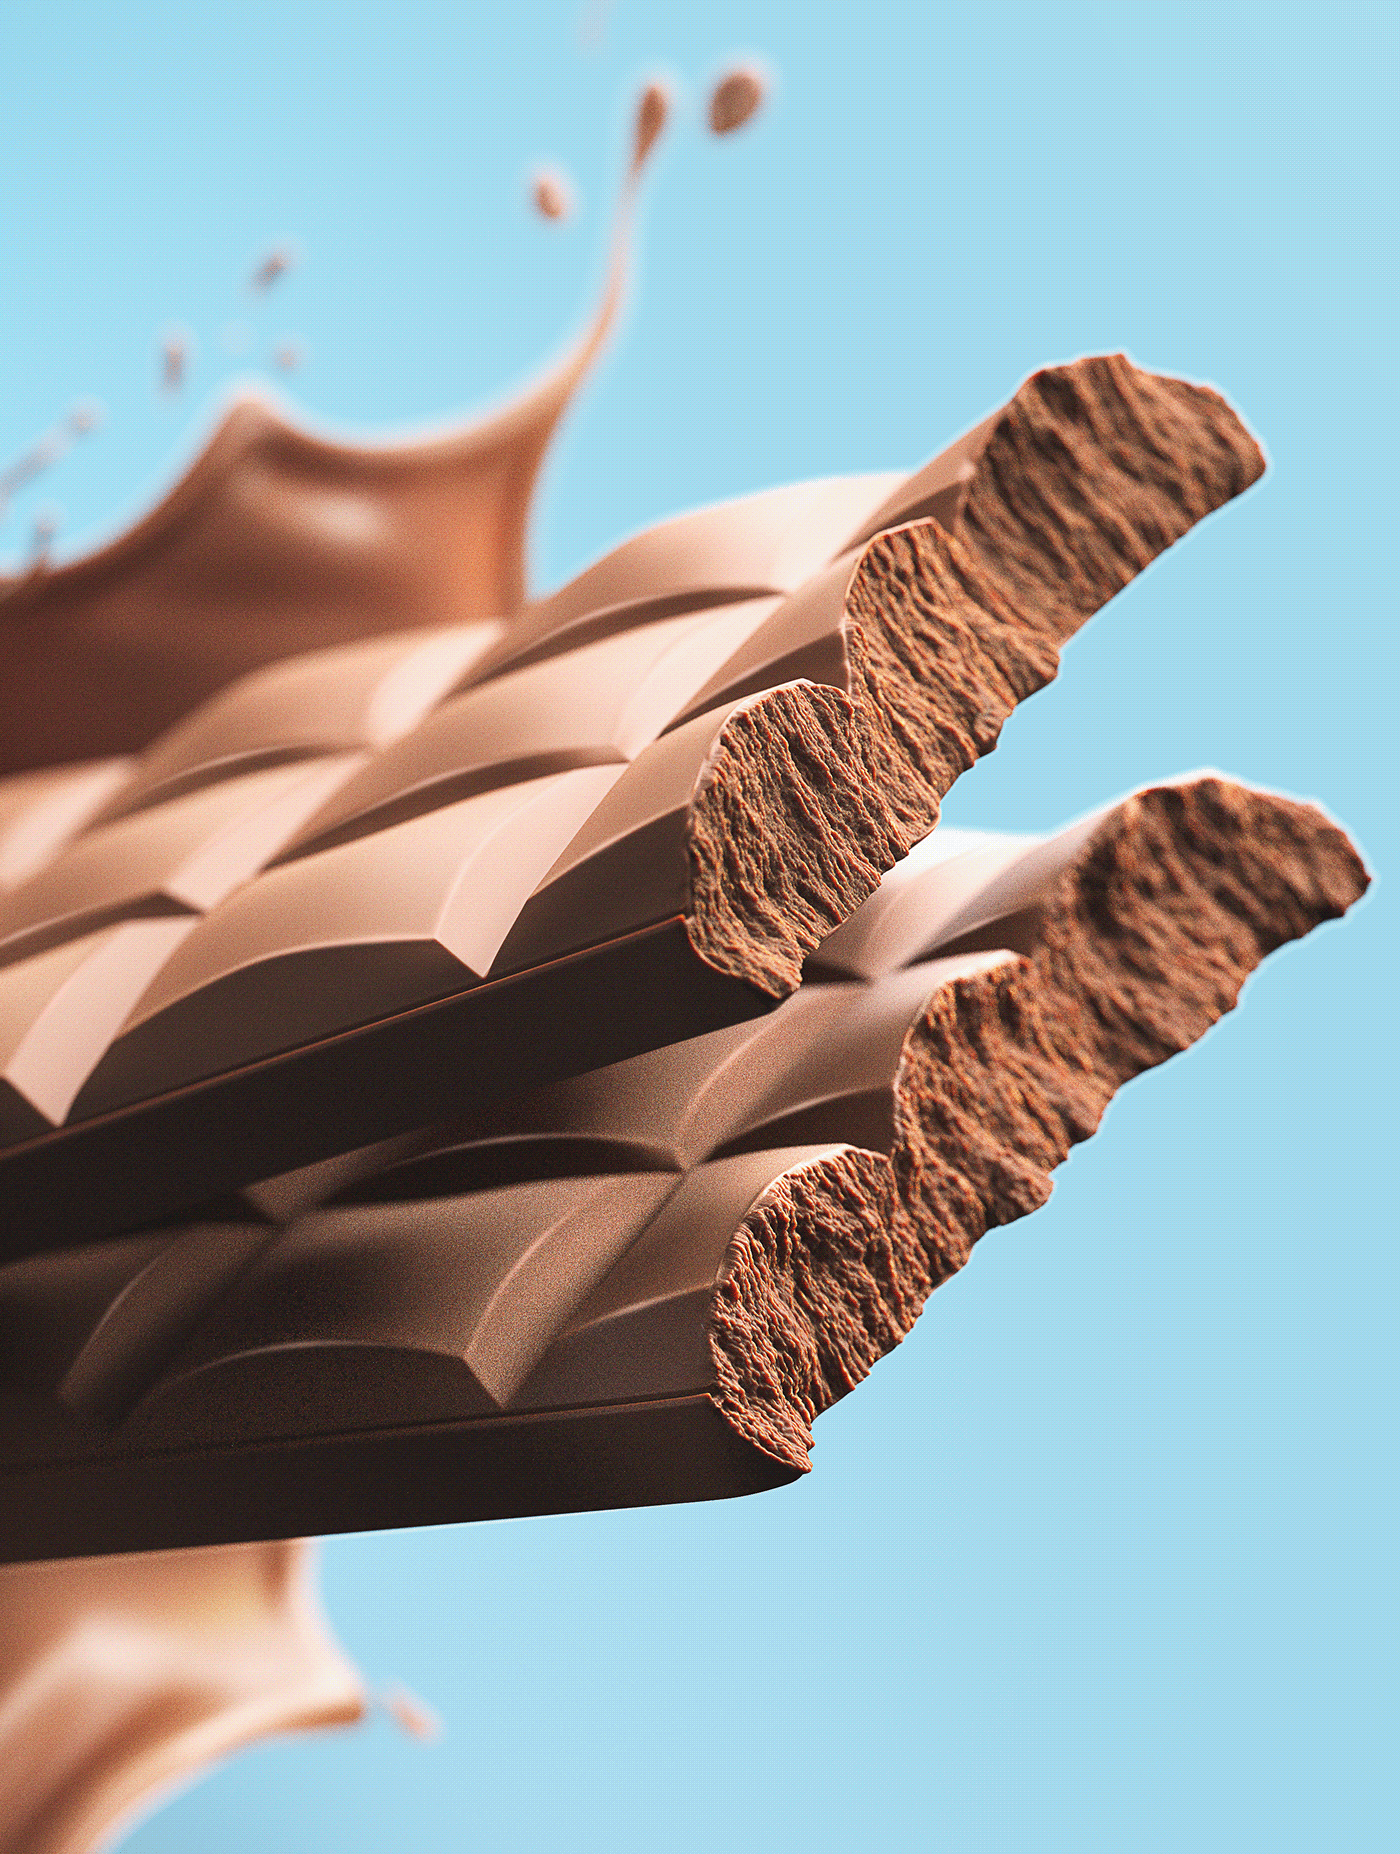 3D CHOCOLATE 3d food broken chocolate cgi food chocolate chocolate bar felipe pavani broken bar